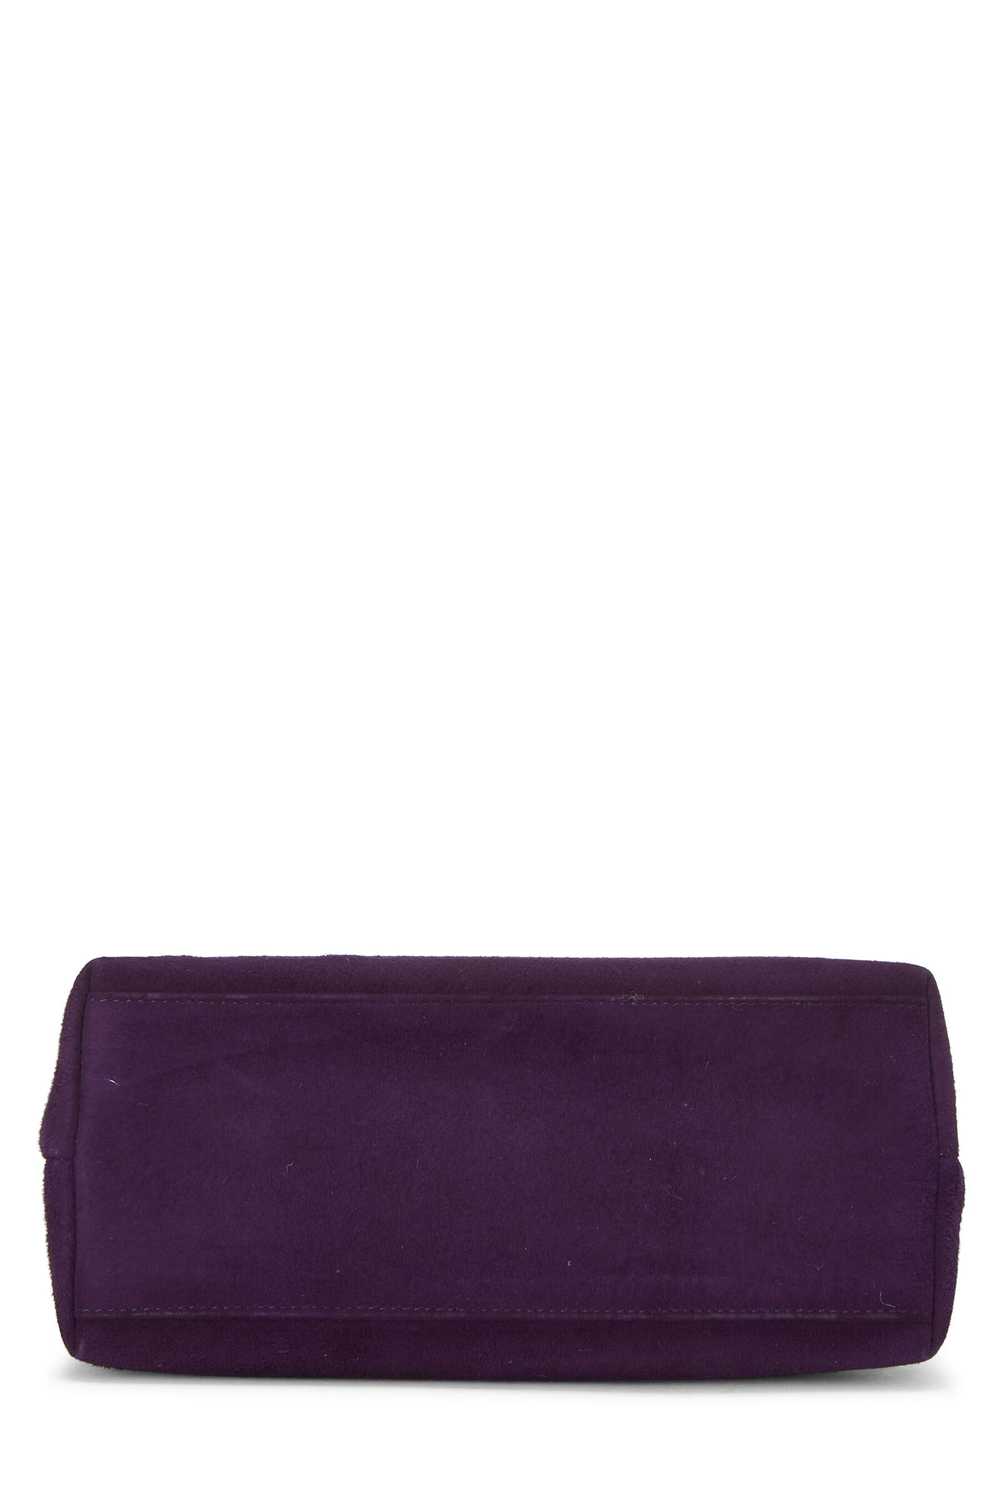 Purple Suede Kiss Lock Mini Bag - image 5